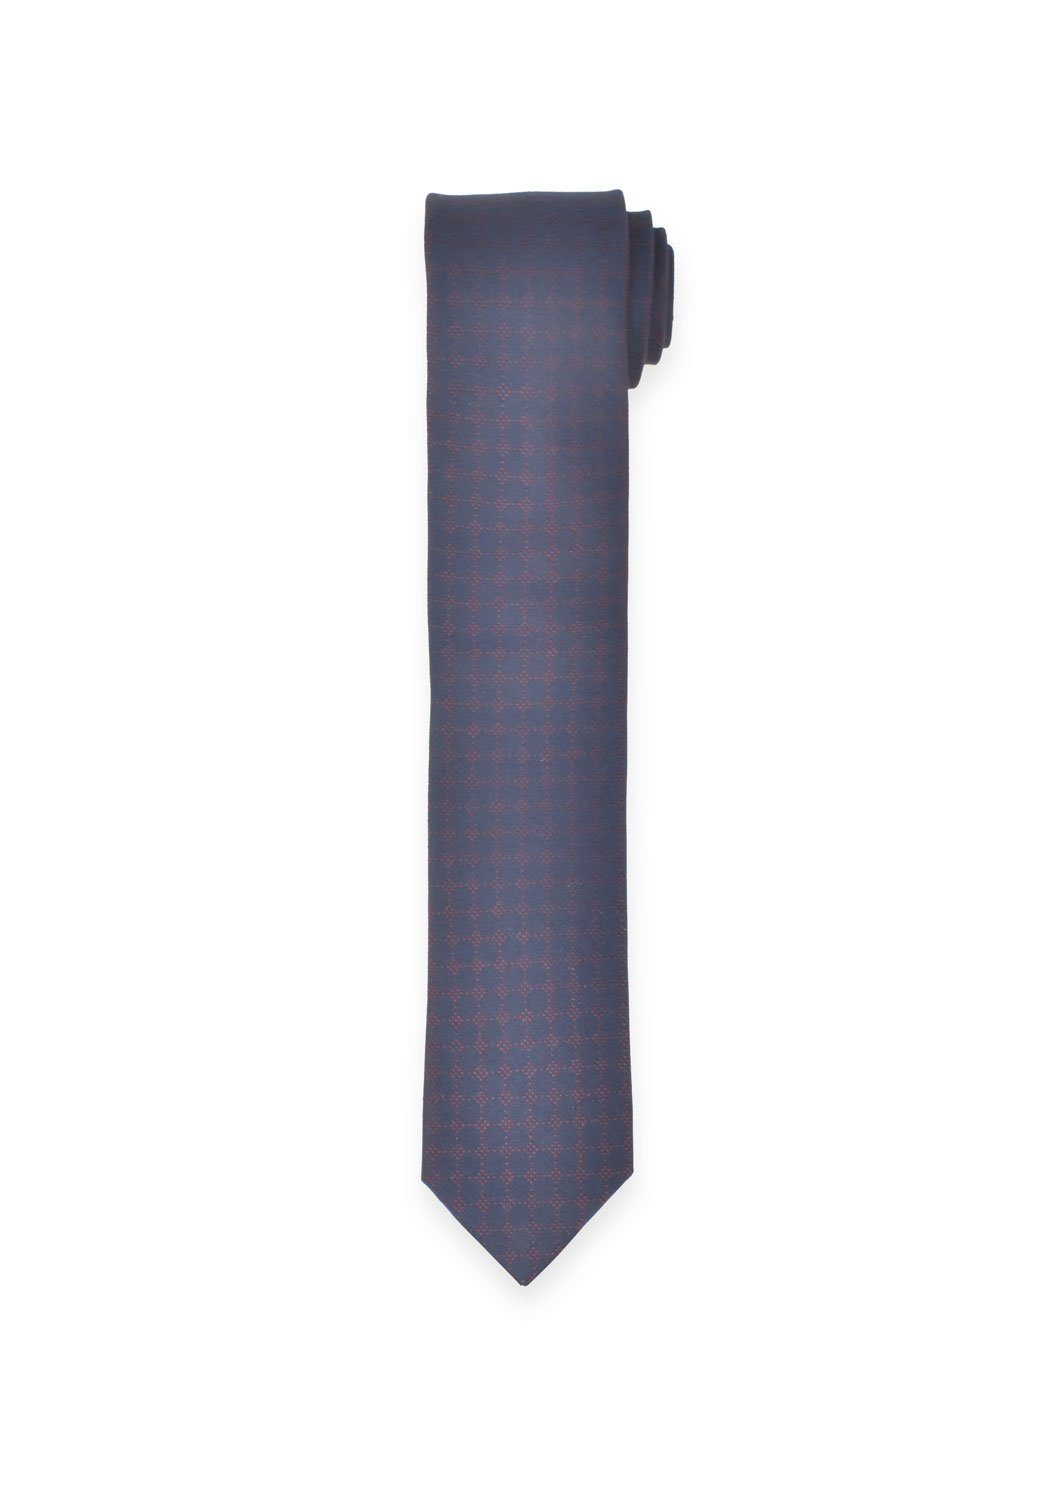 MARVELIS Krawatte Krawatte - Punkte - Dunkelblau/Cognac - 6,5 cm